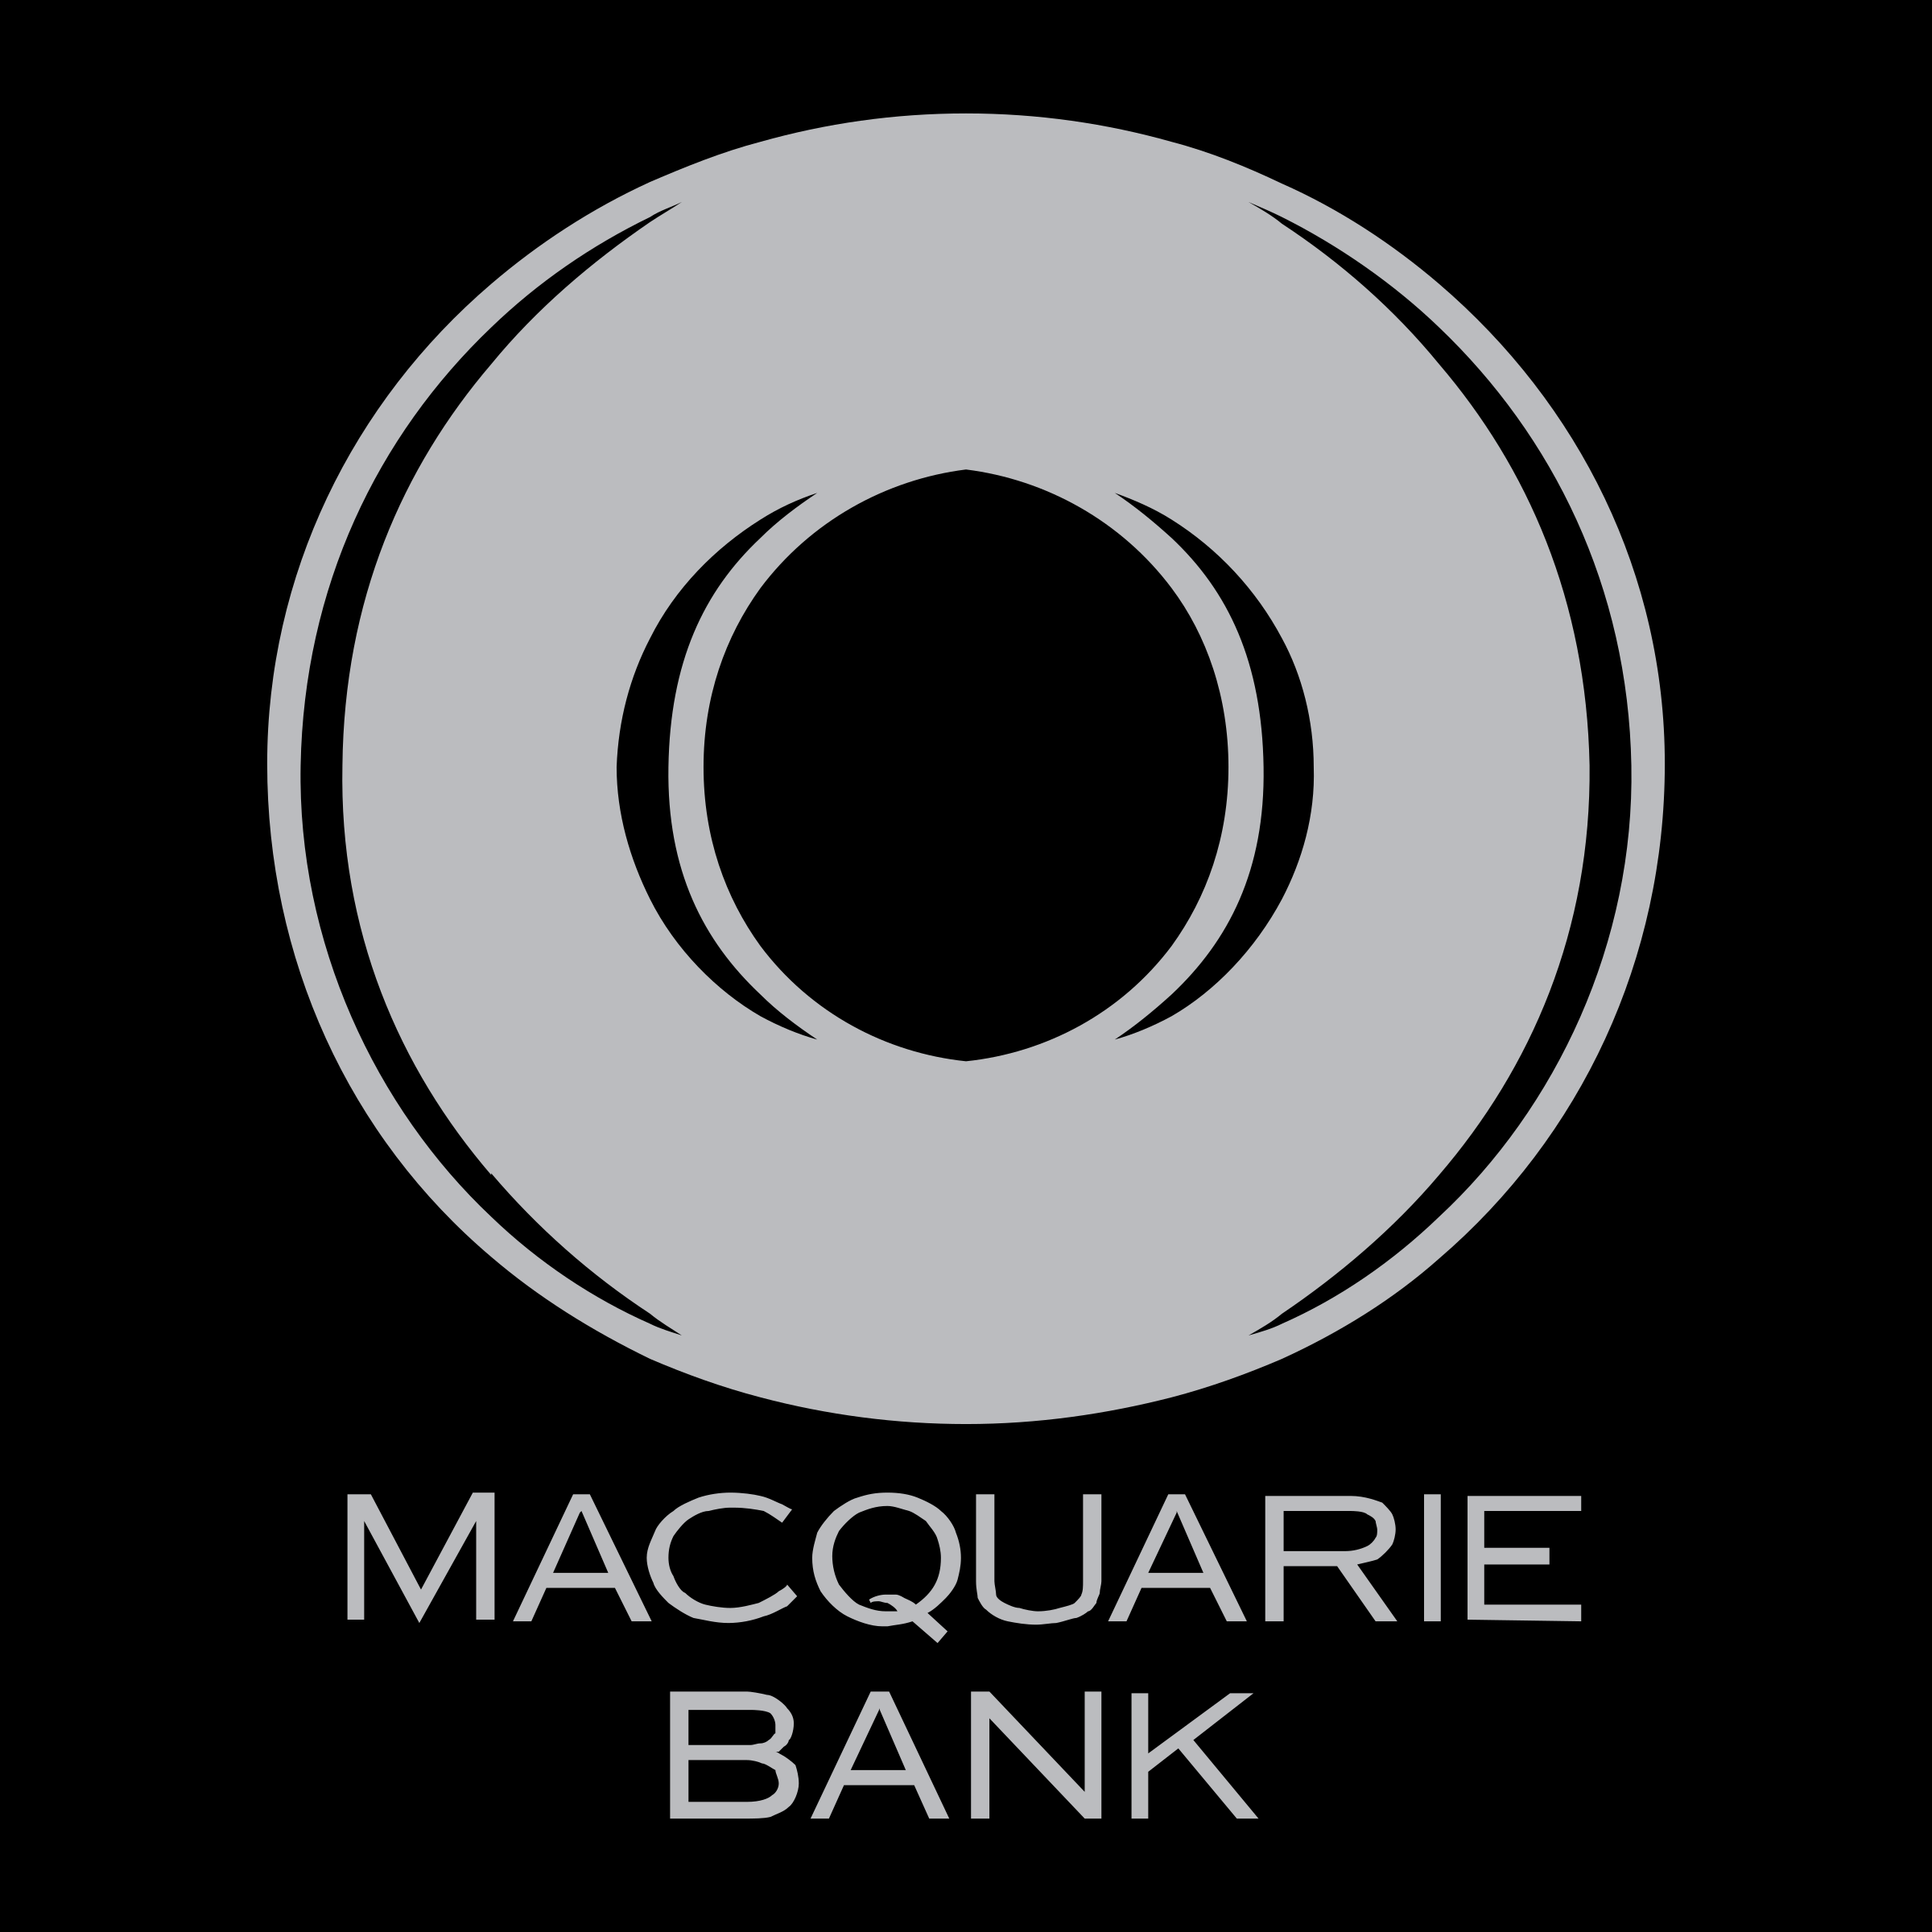 Macquarie Logo - Macquarie Bank Limited Logo PNG Transparent & SVG Vector - Freebie ...